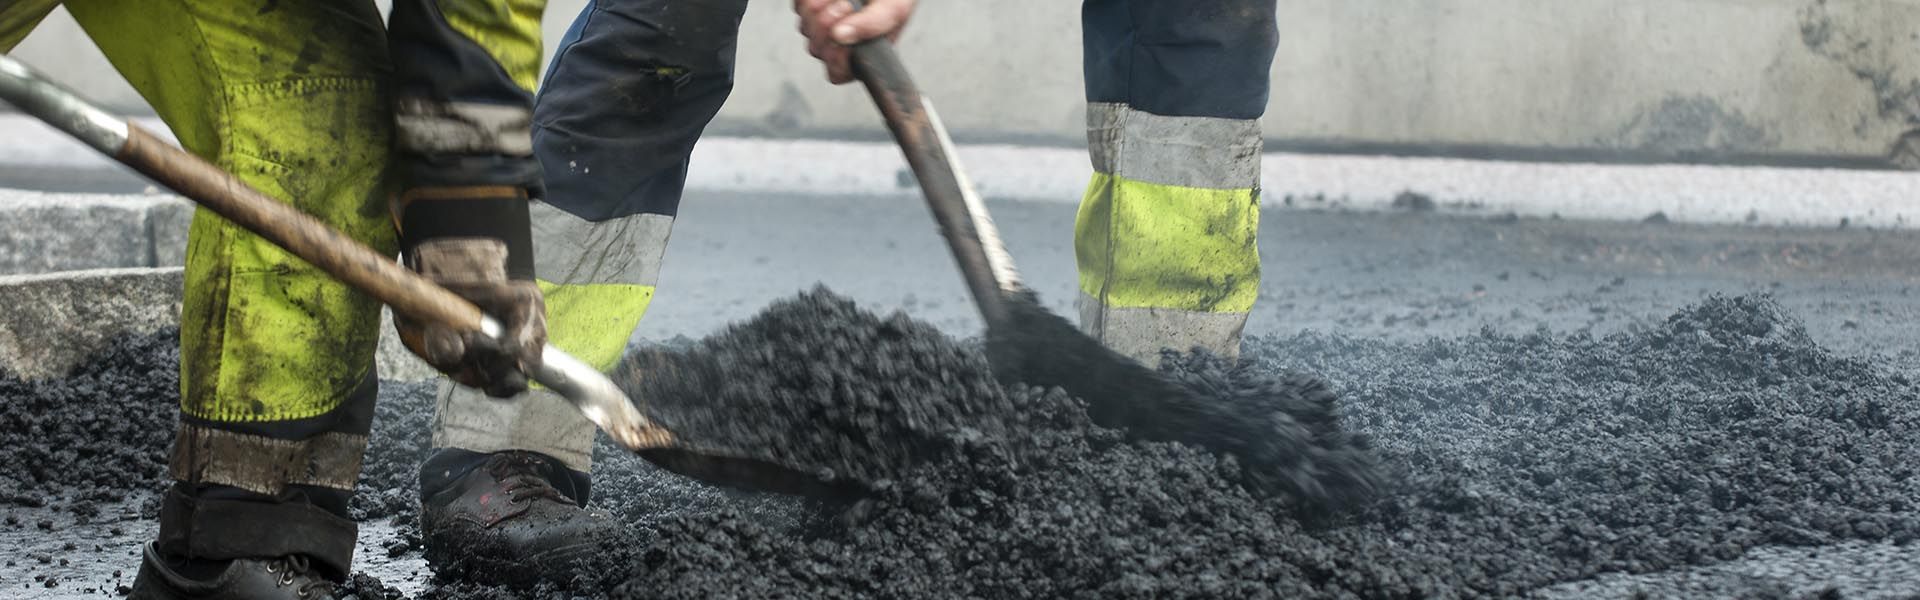 An asphalt paving worker scoops asphalt in his construction labor job